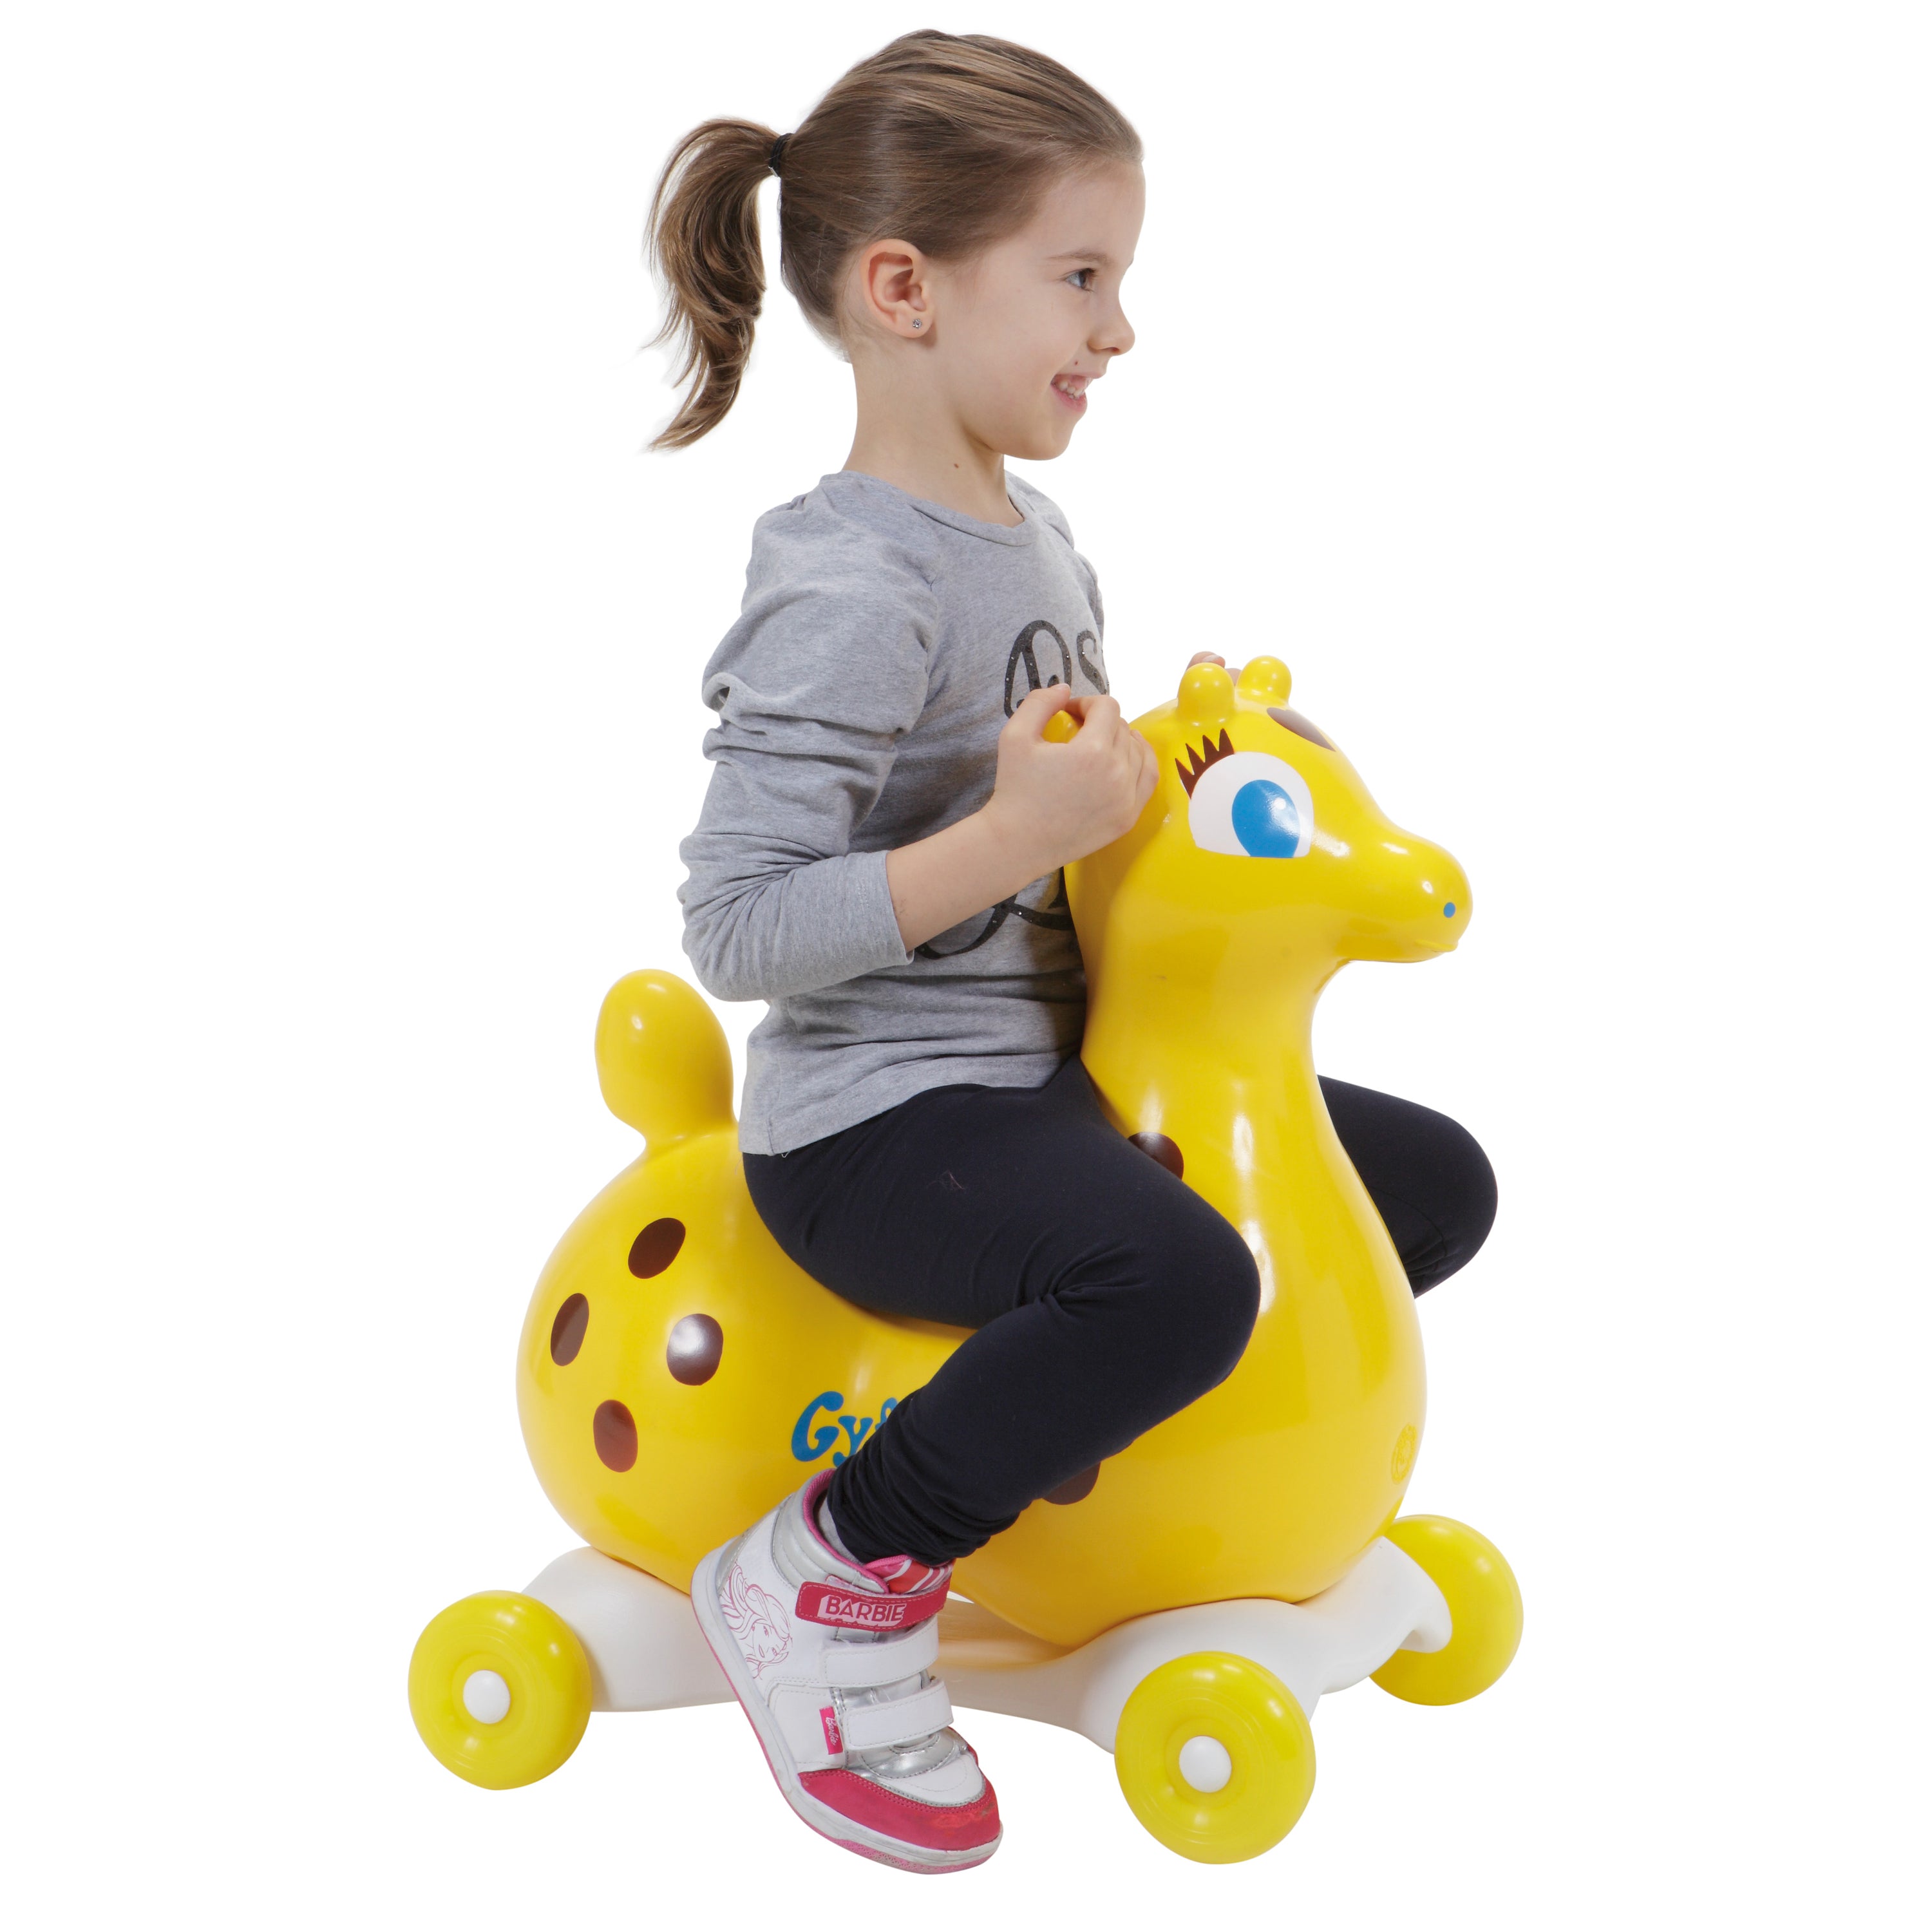 Gyffy The Giraffe Bounce Toy With Speedy Base